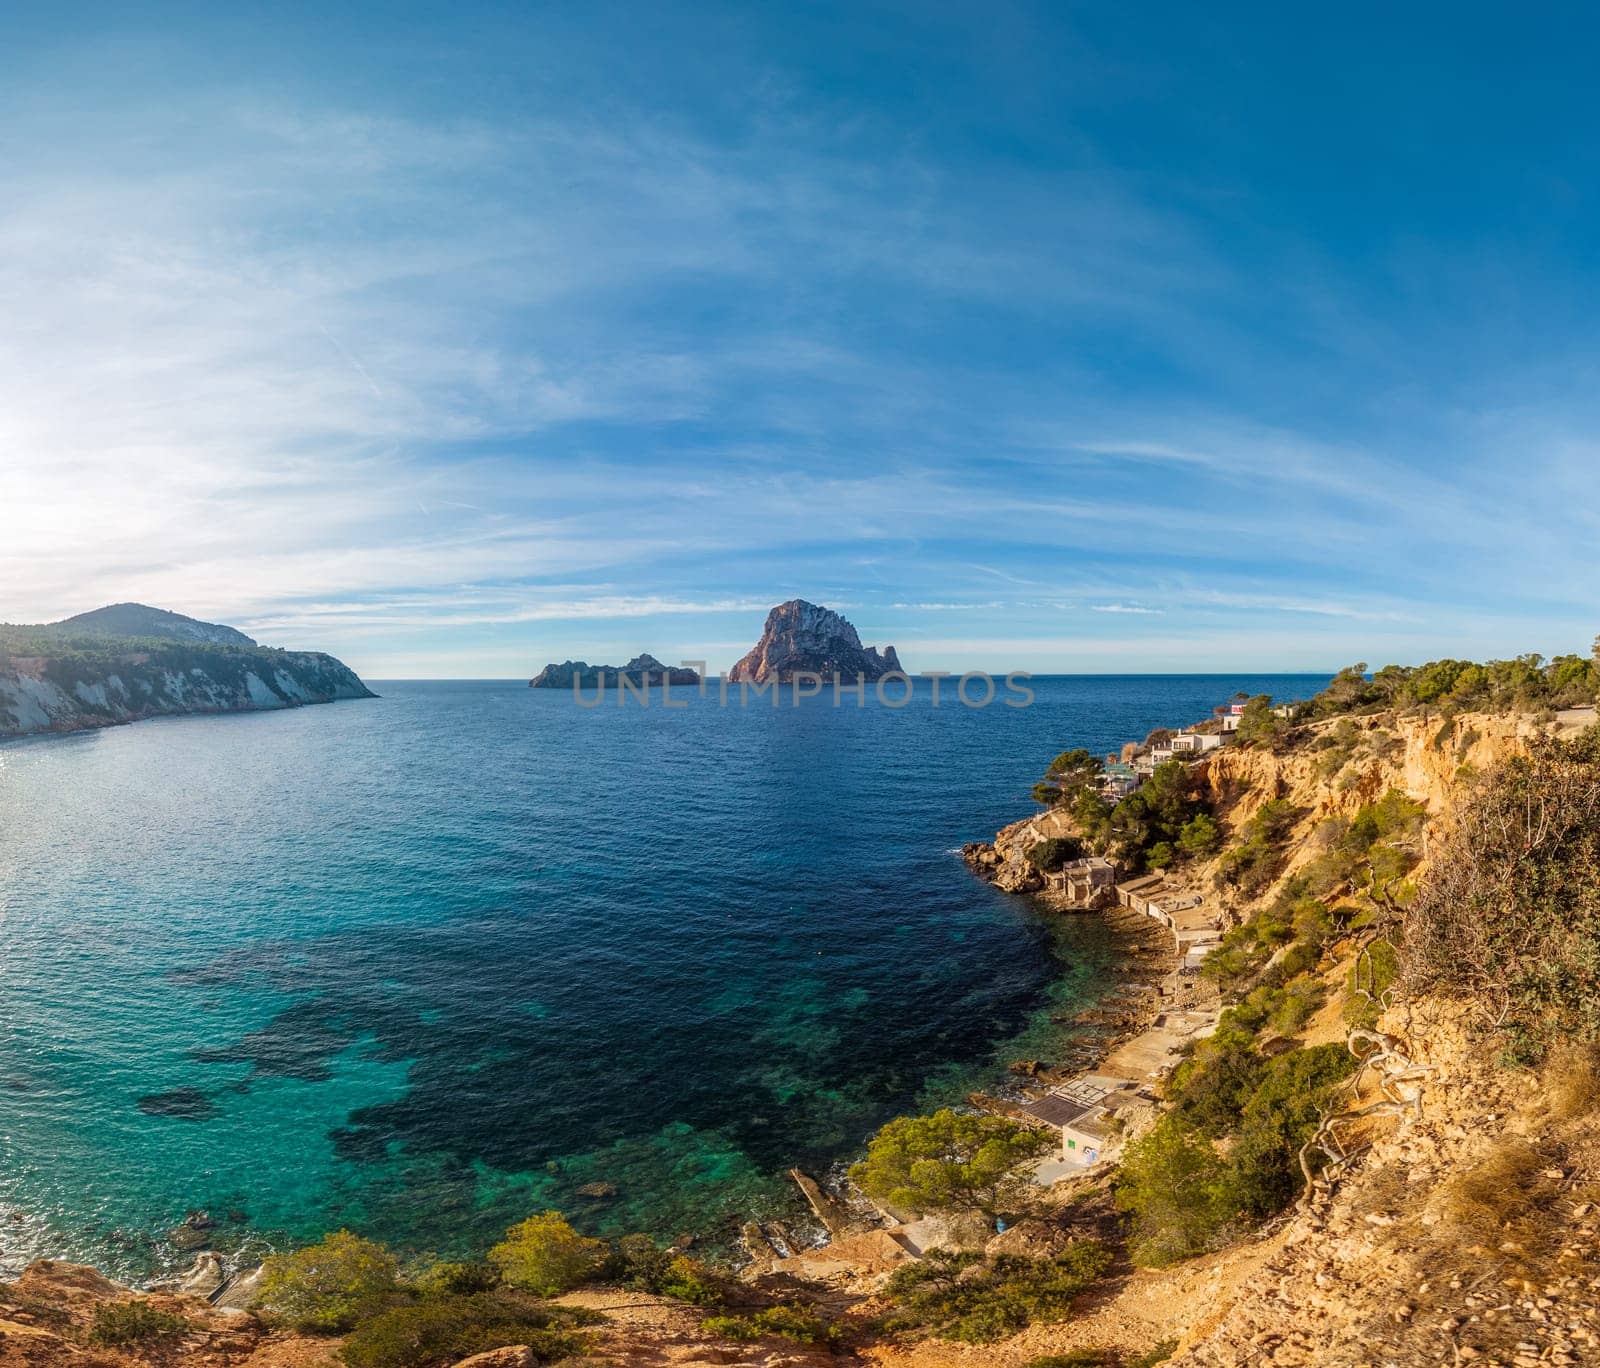 Scenic Mediterranean Coastline with Majestic Rock Formations by FerradalFCG